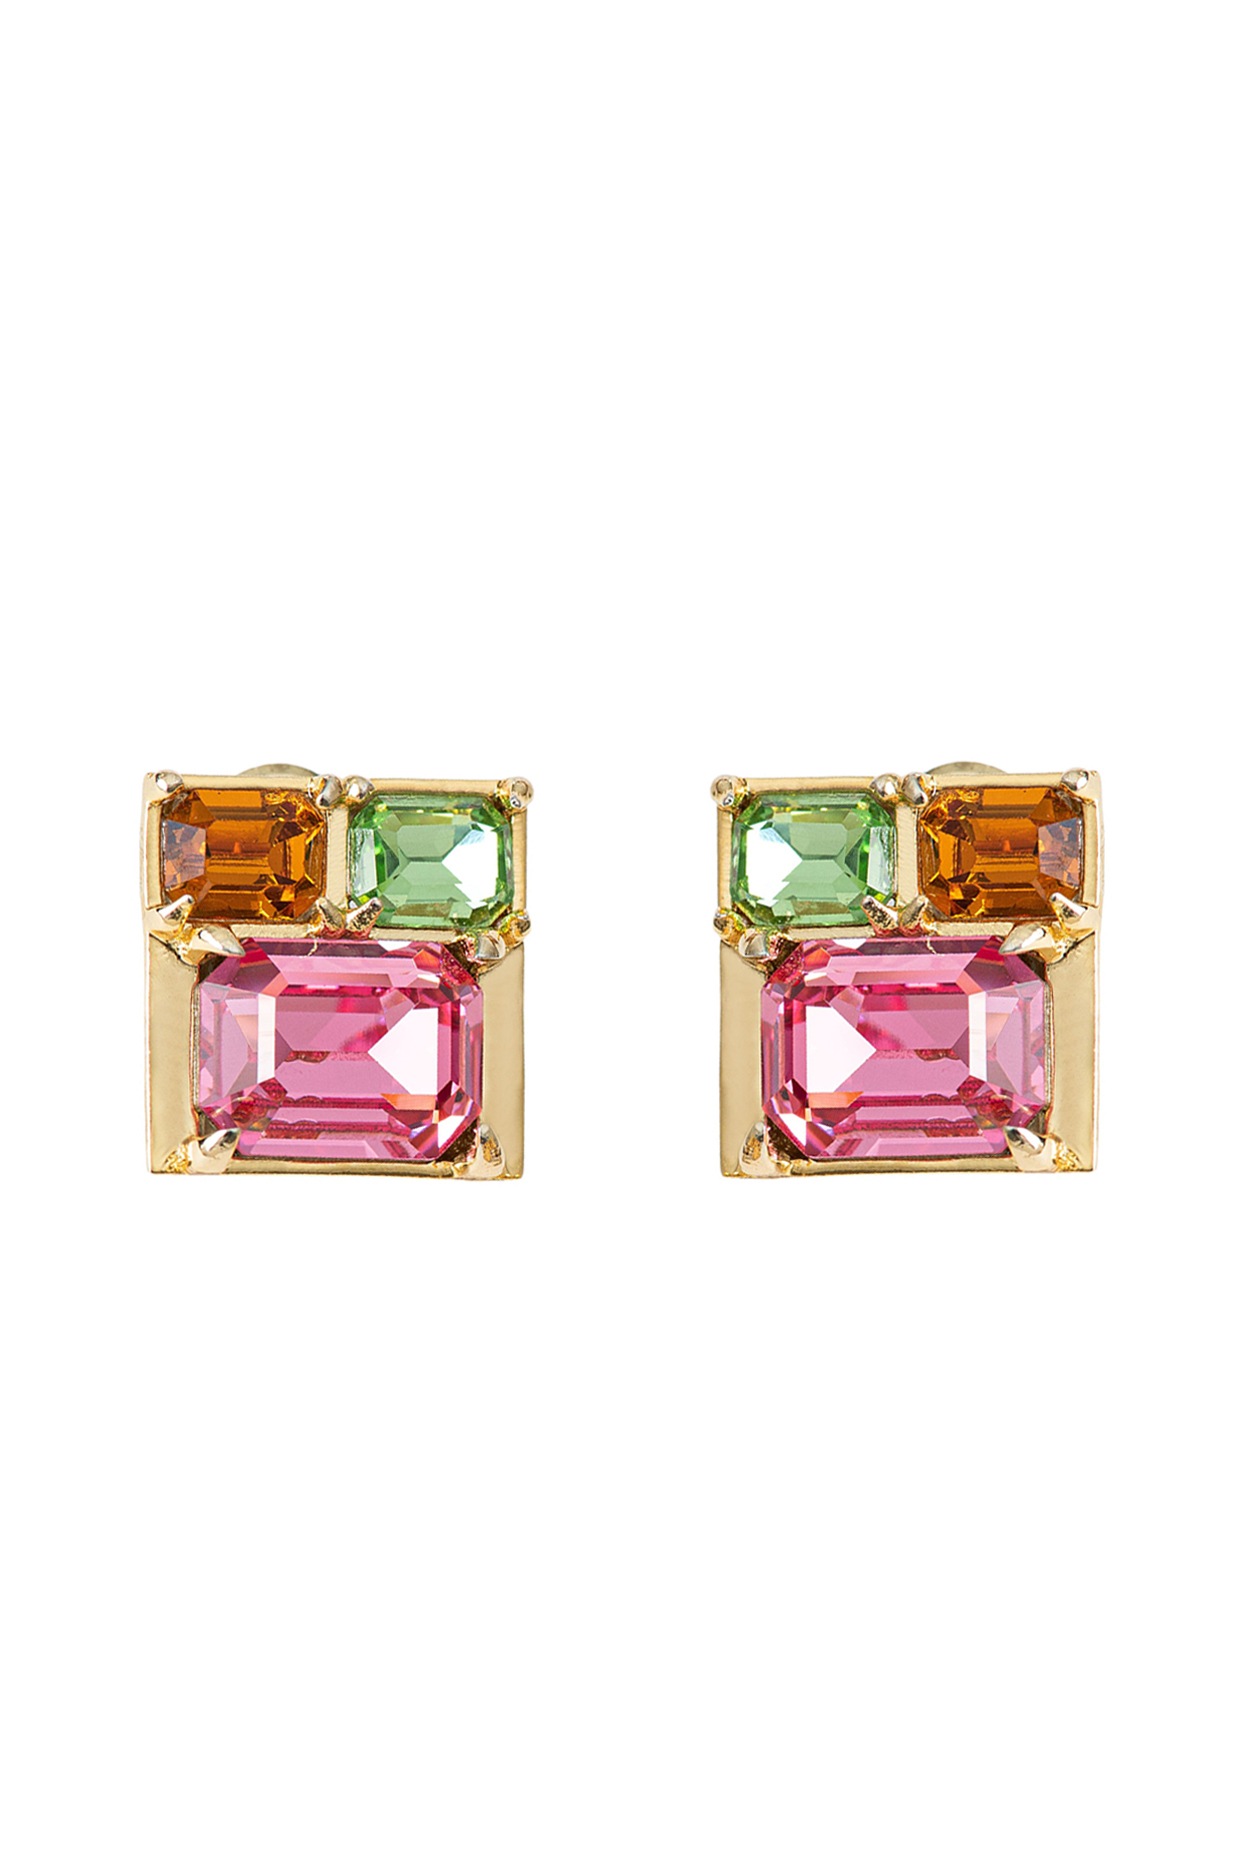 Clear Crystal Drop Earrings Swarovski Rectangle Drop | Etsy | Crystal  earrings wedding, Swarovski earrings, Crystal drop earrings